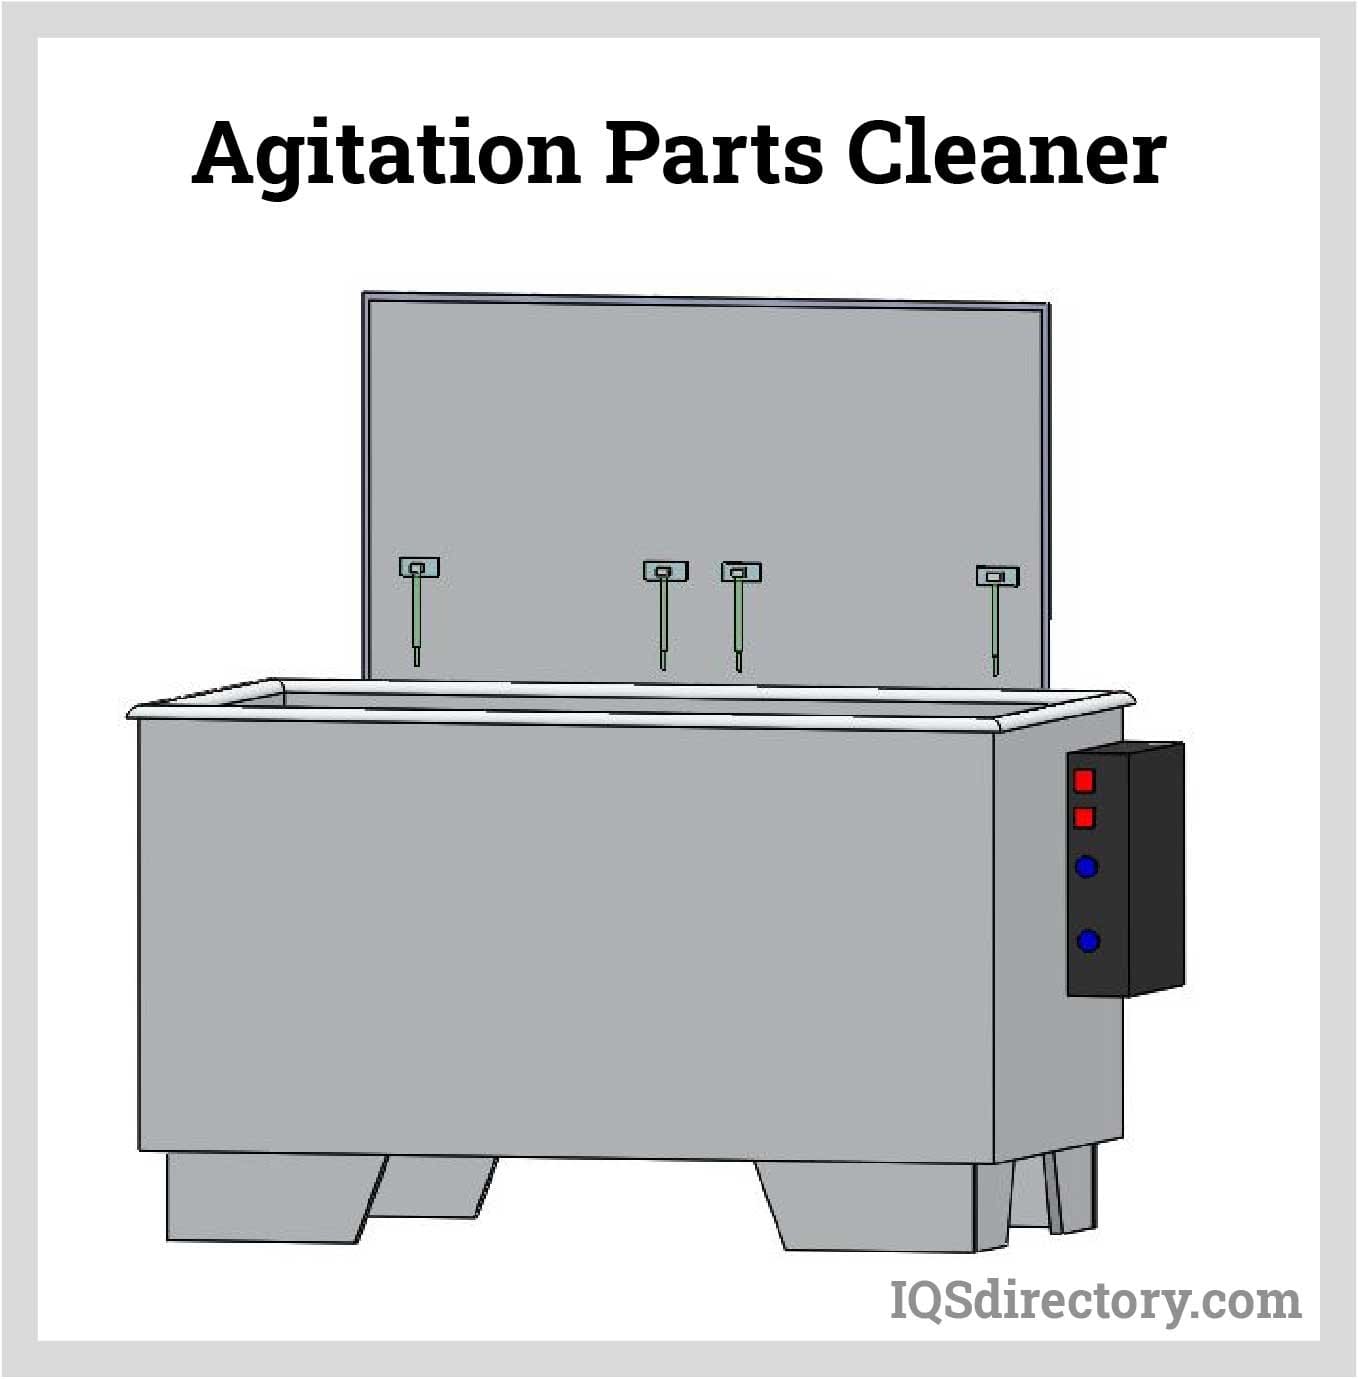 Agitation Parts Cleaner